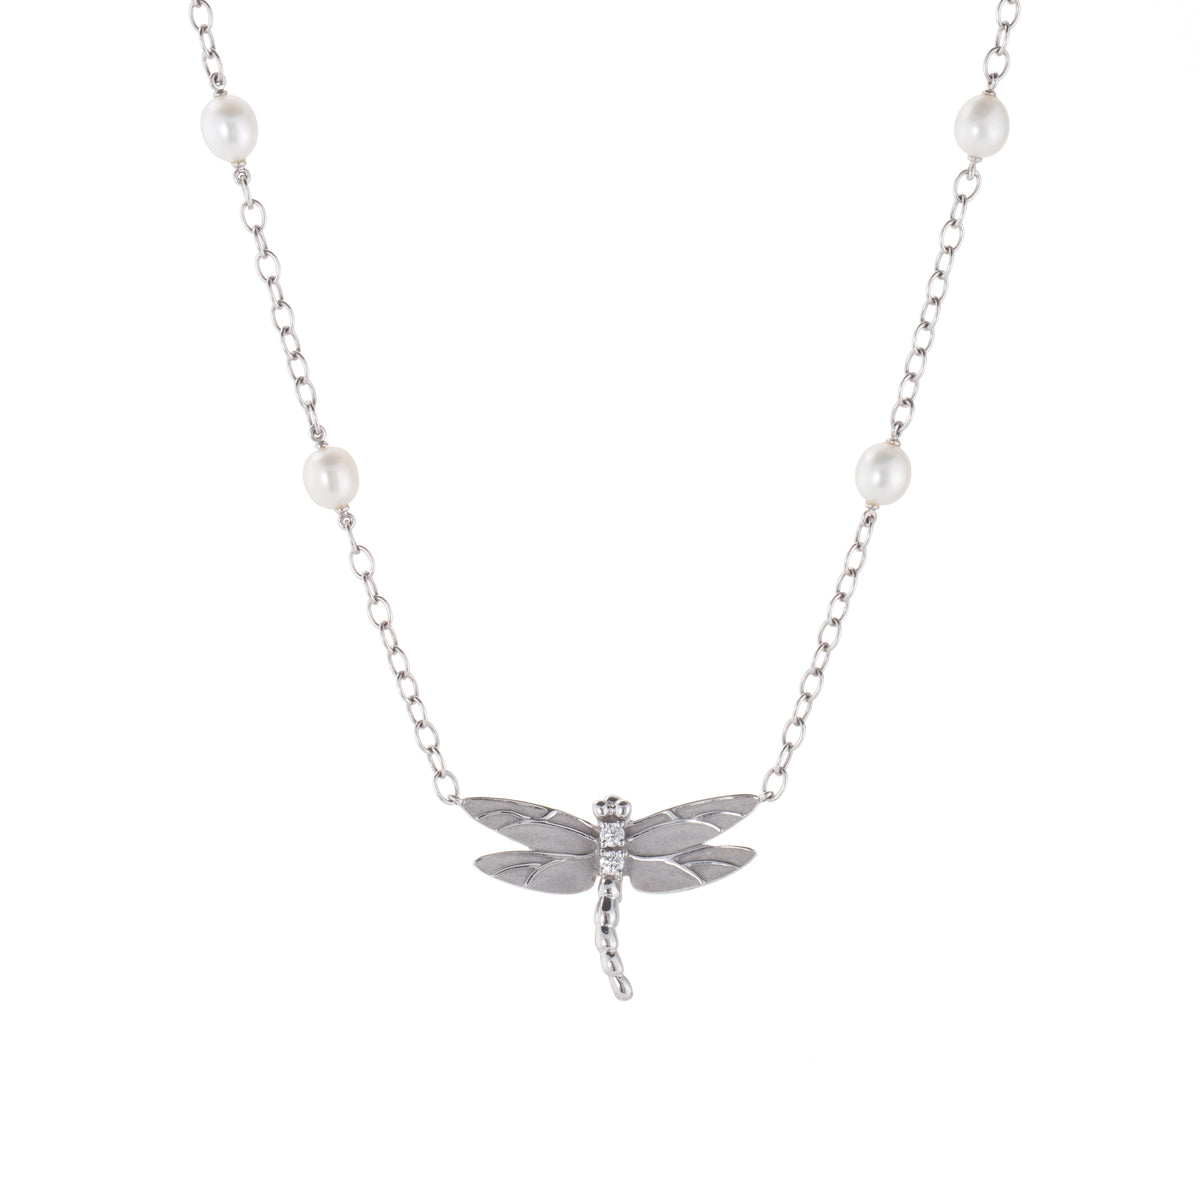 dragonfly necklace | Portobello Lane